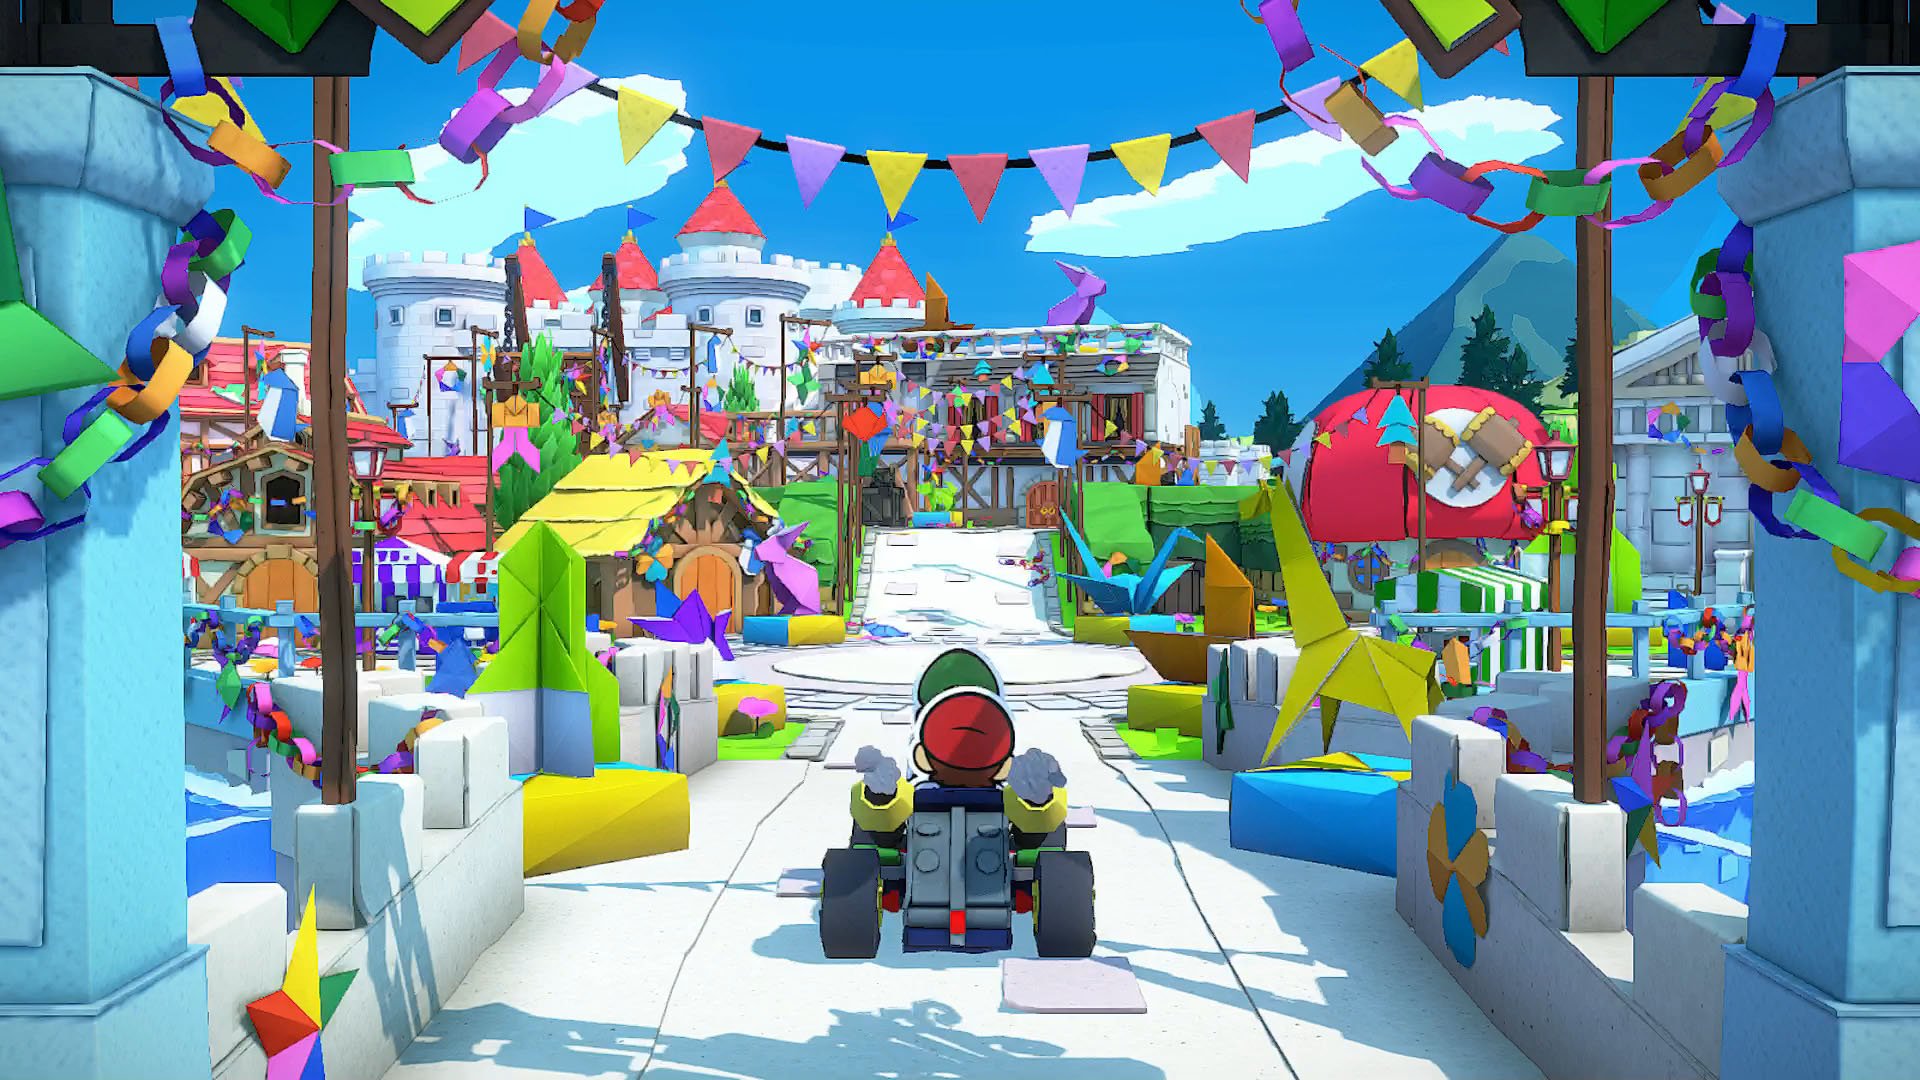 Paper Mario: The Origami King: The Kotaku Review